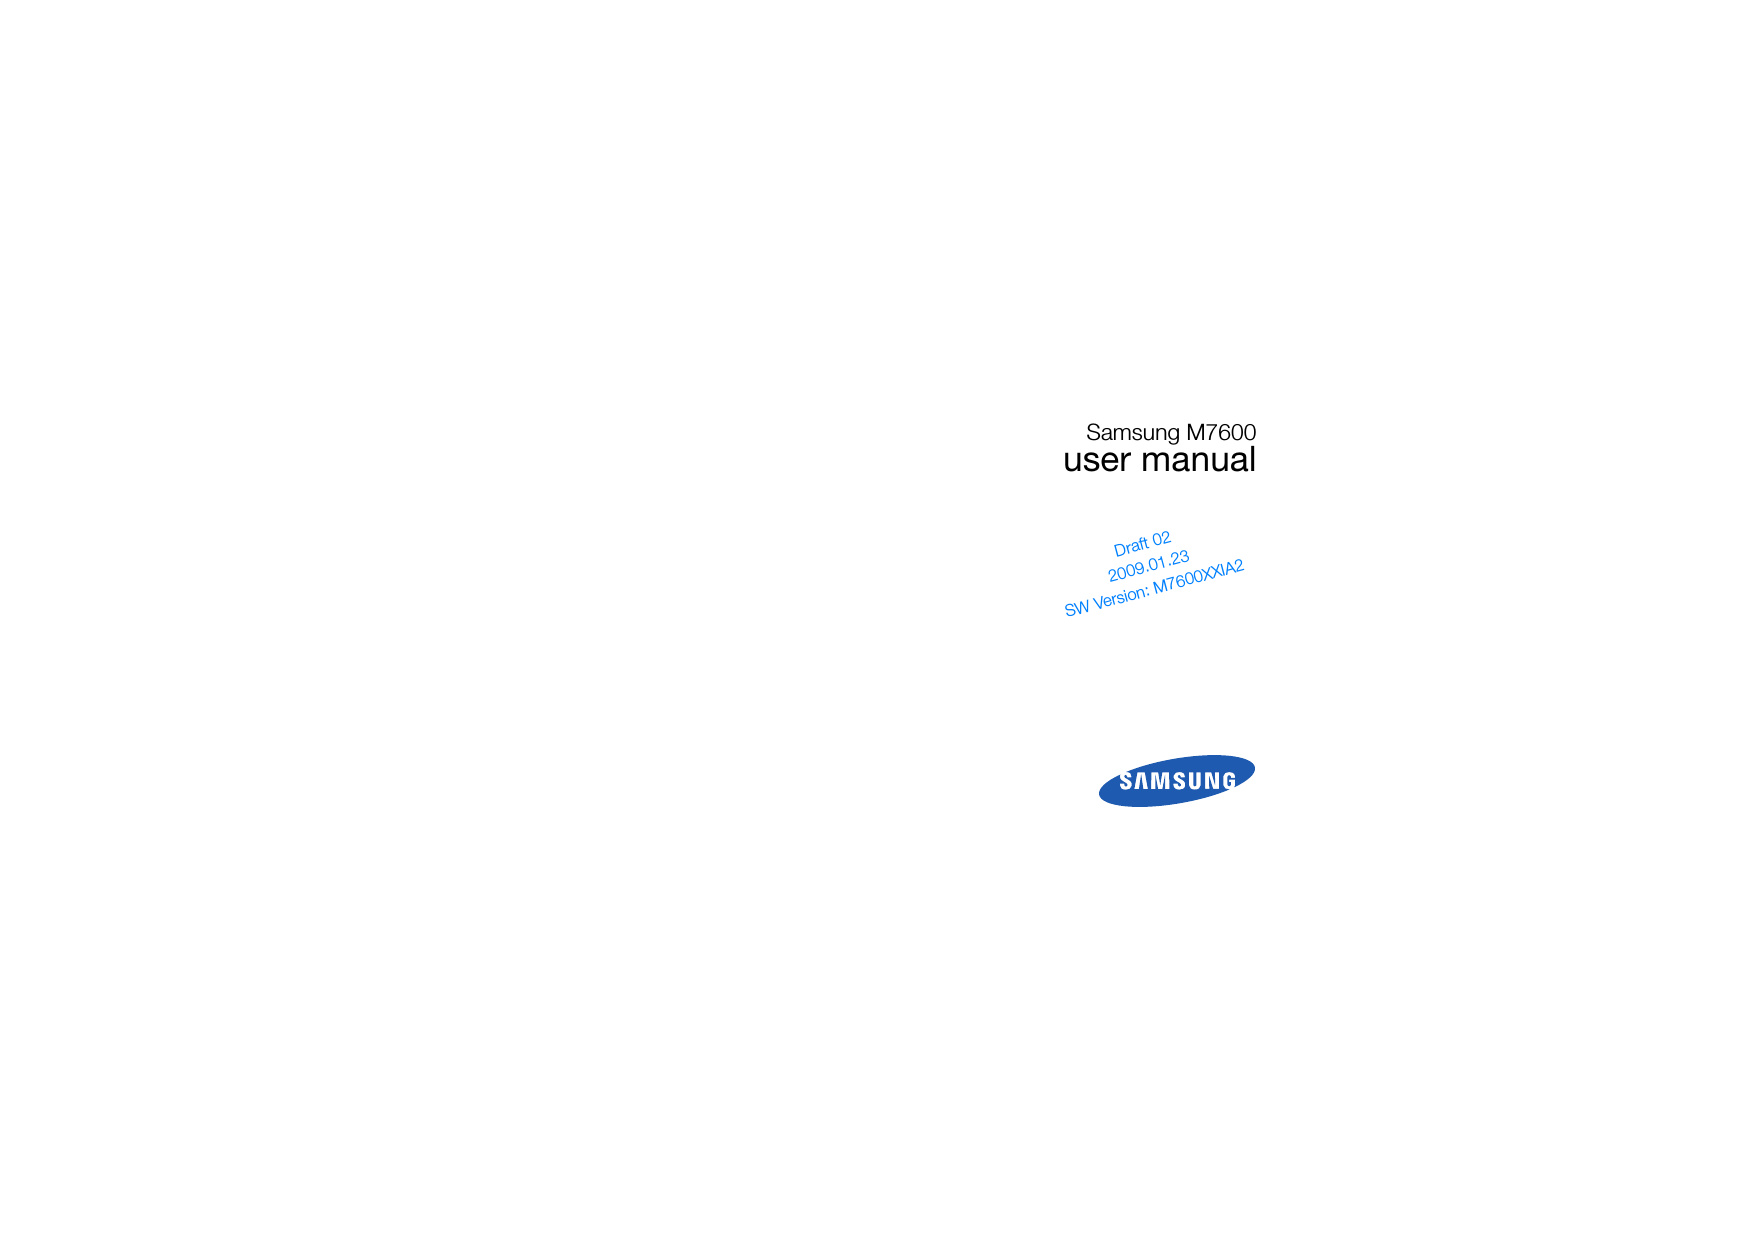 Samsung M7600user manualDraft 022009.01.23SW Version: M7600XXIA2